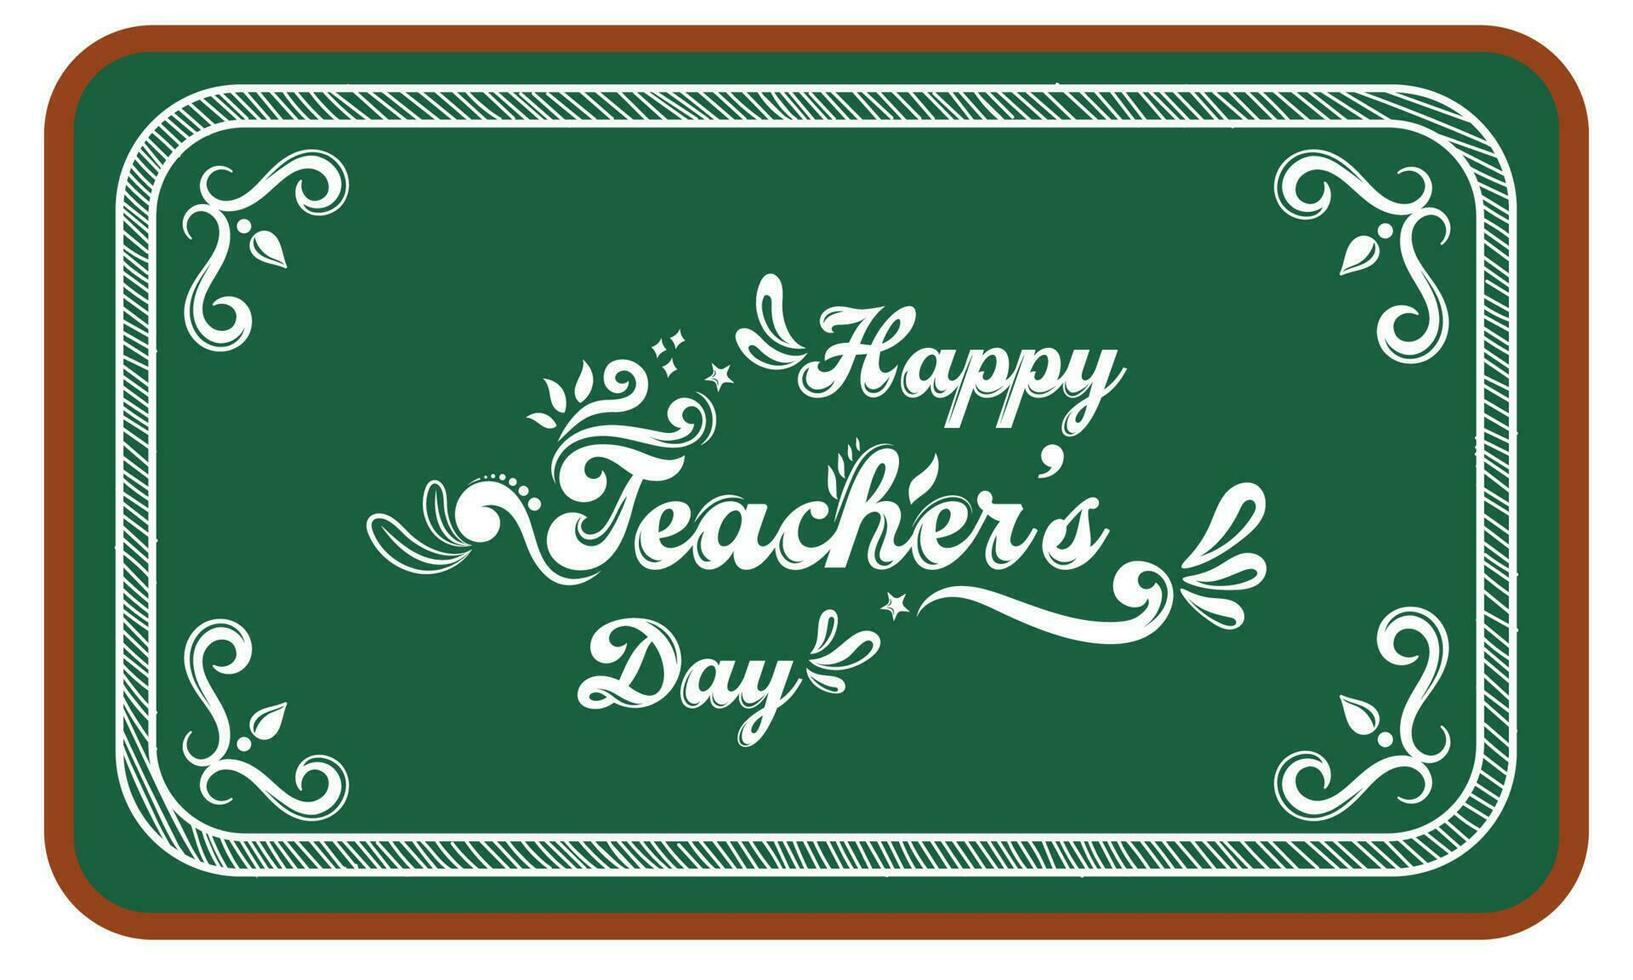 Happy Teacher's Day Lettering On Chalkboard Illustration. vector